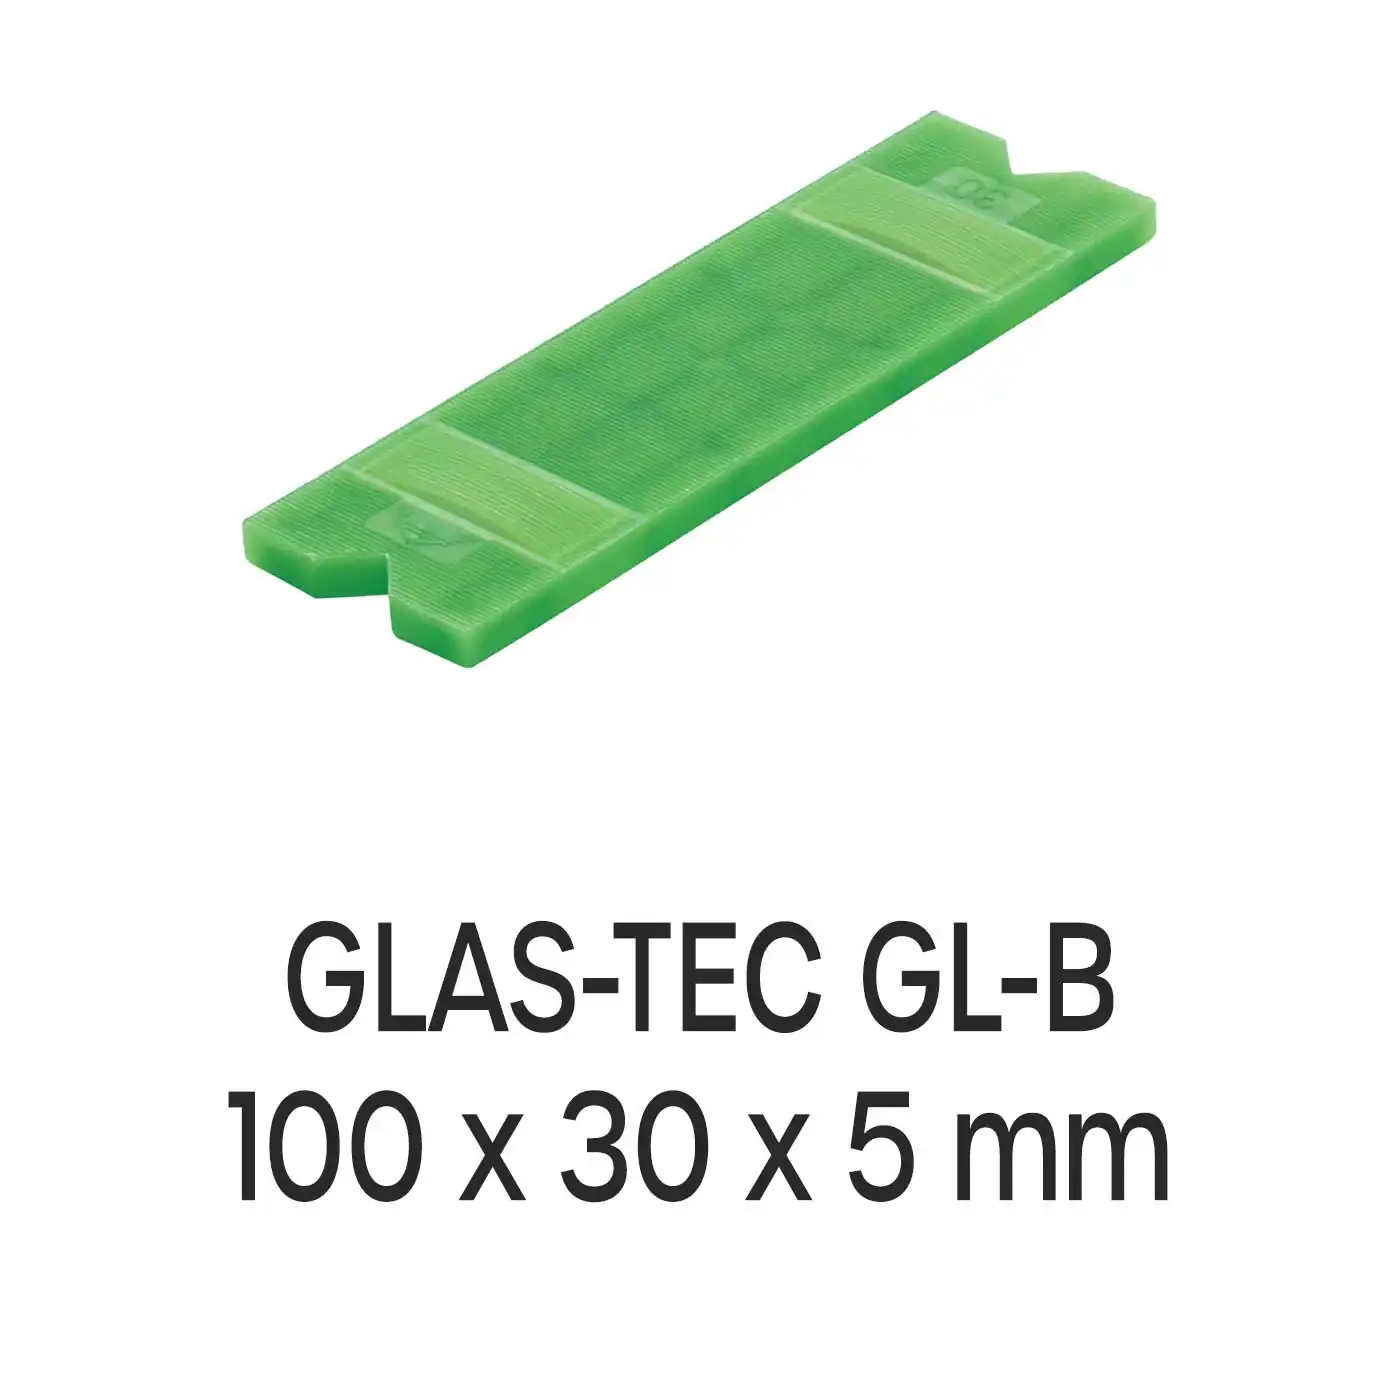 Roto GLAS-TEC GL-B 100 x 30 x 5 mm Verglasungsklötze 500 Stück